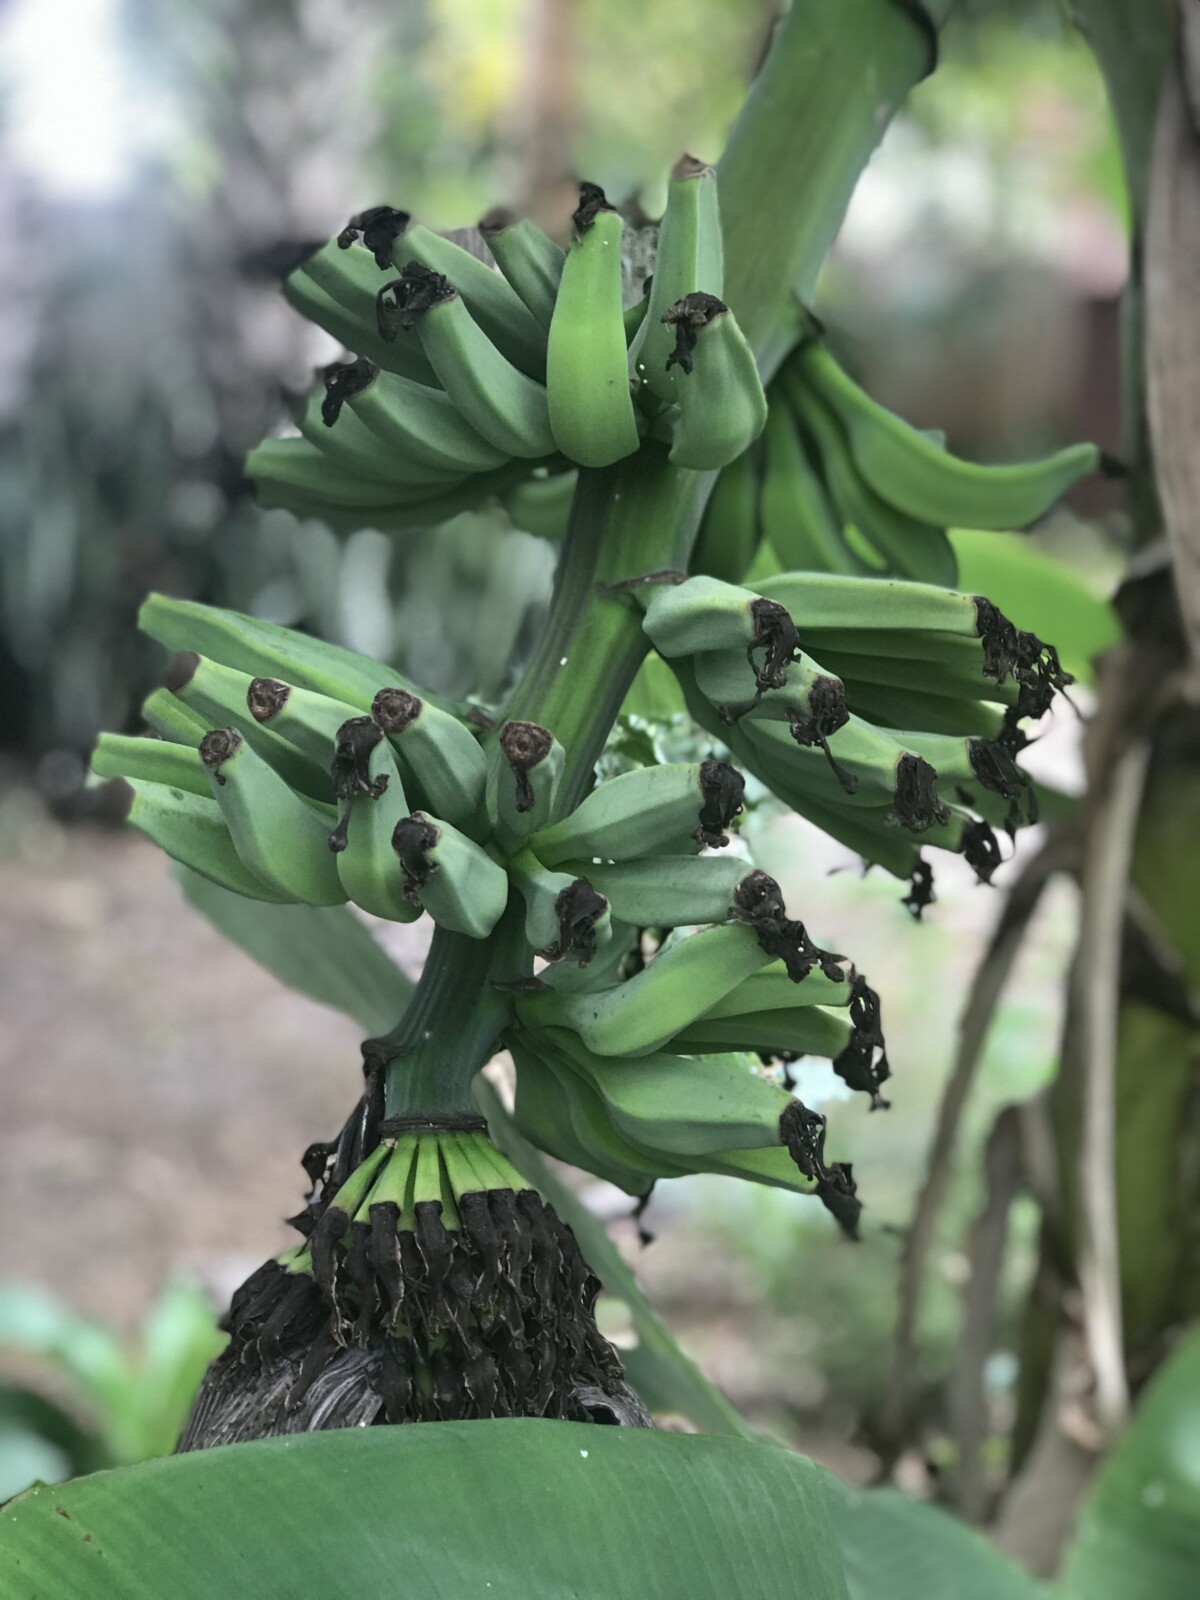 Banana tree with lots of unripe, green bananas.